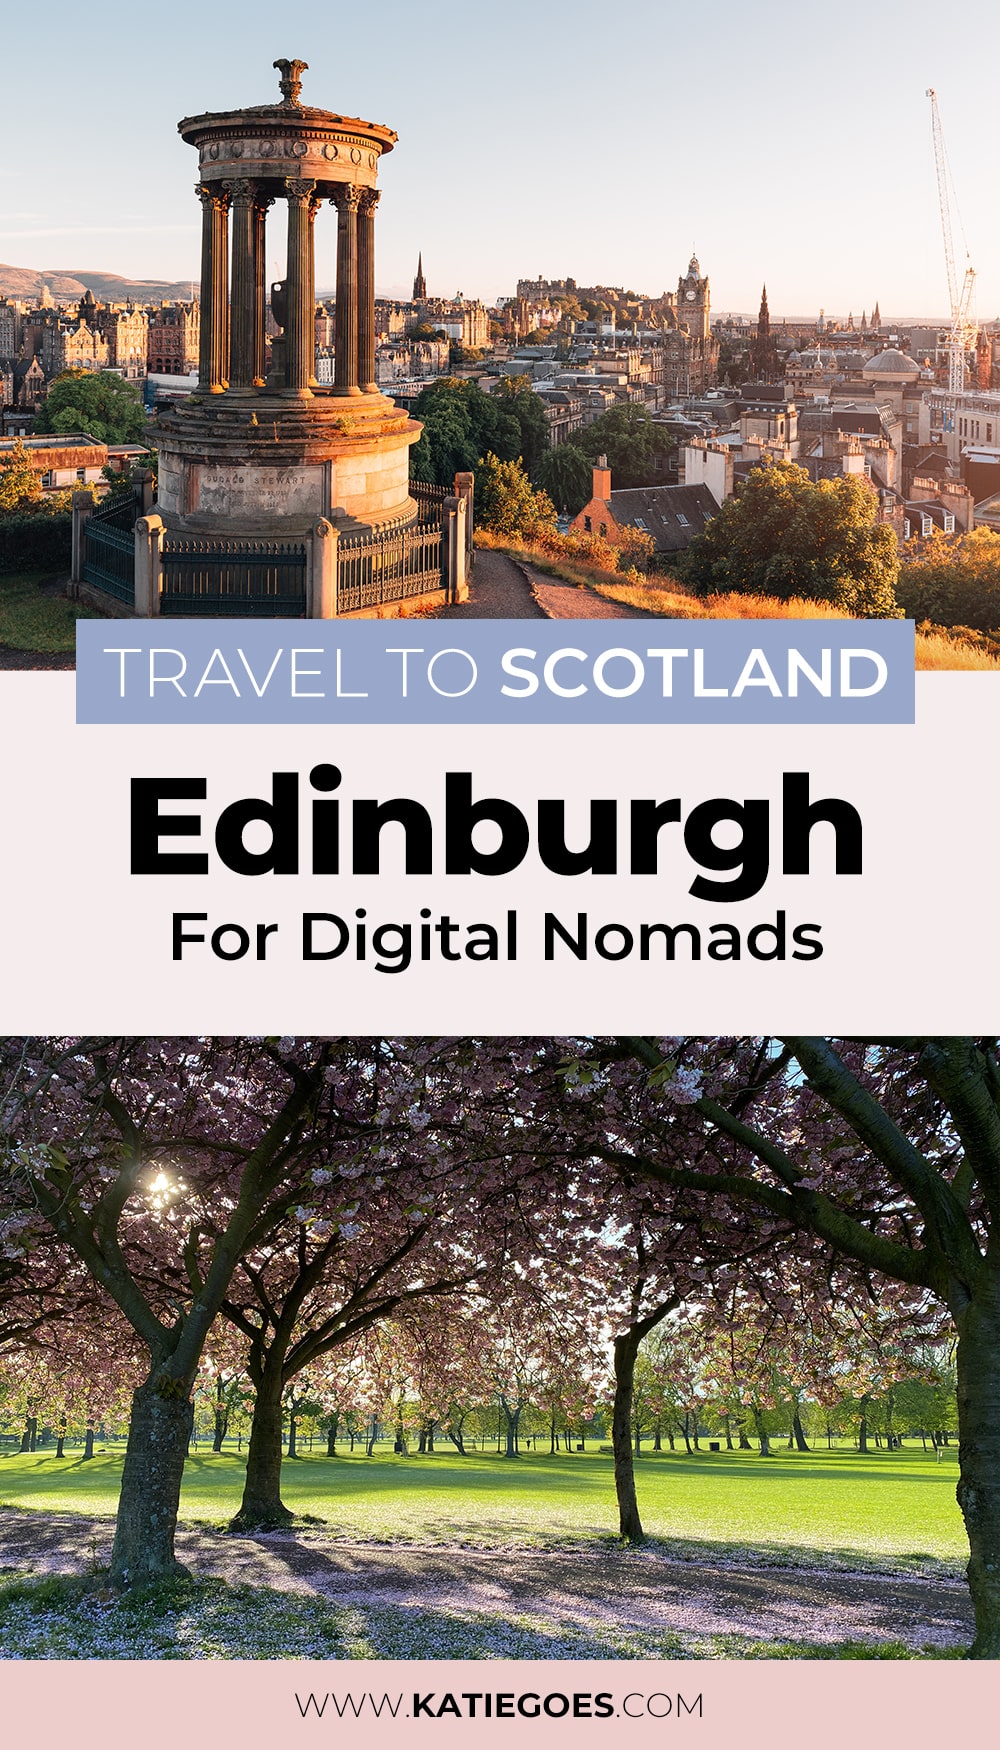 Edinburgh for Digital Nomads: Travel to Scotland